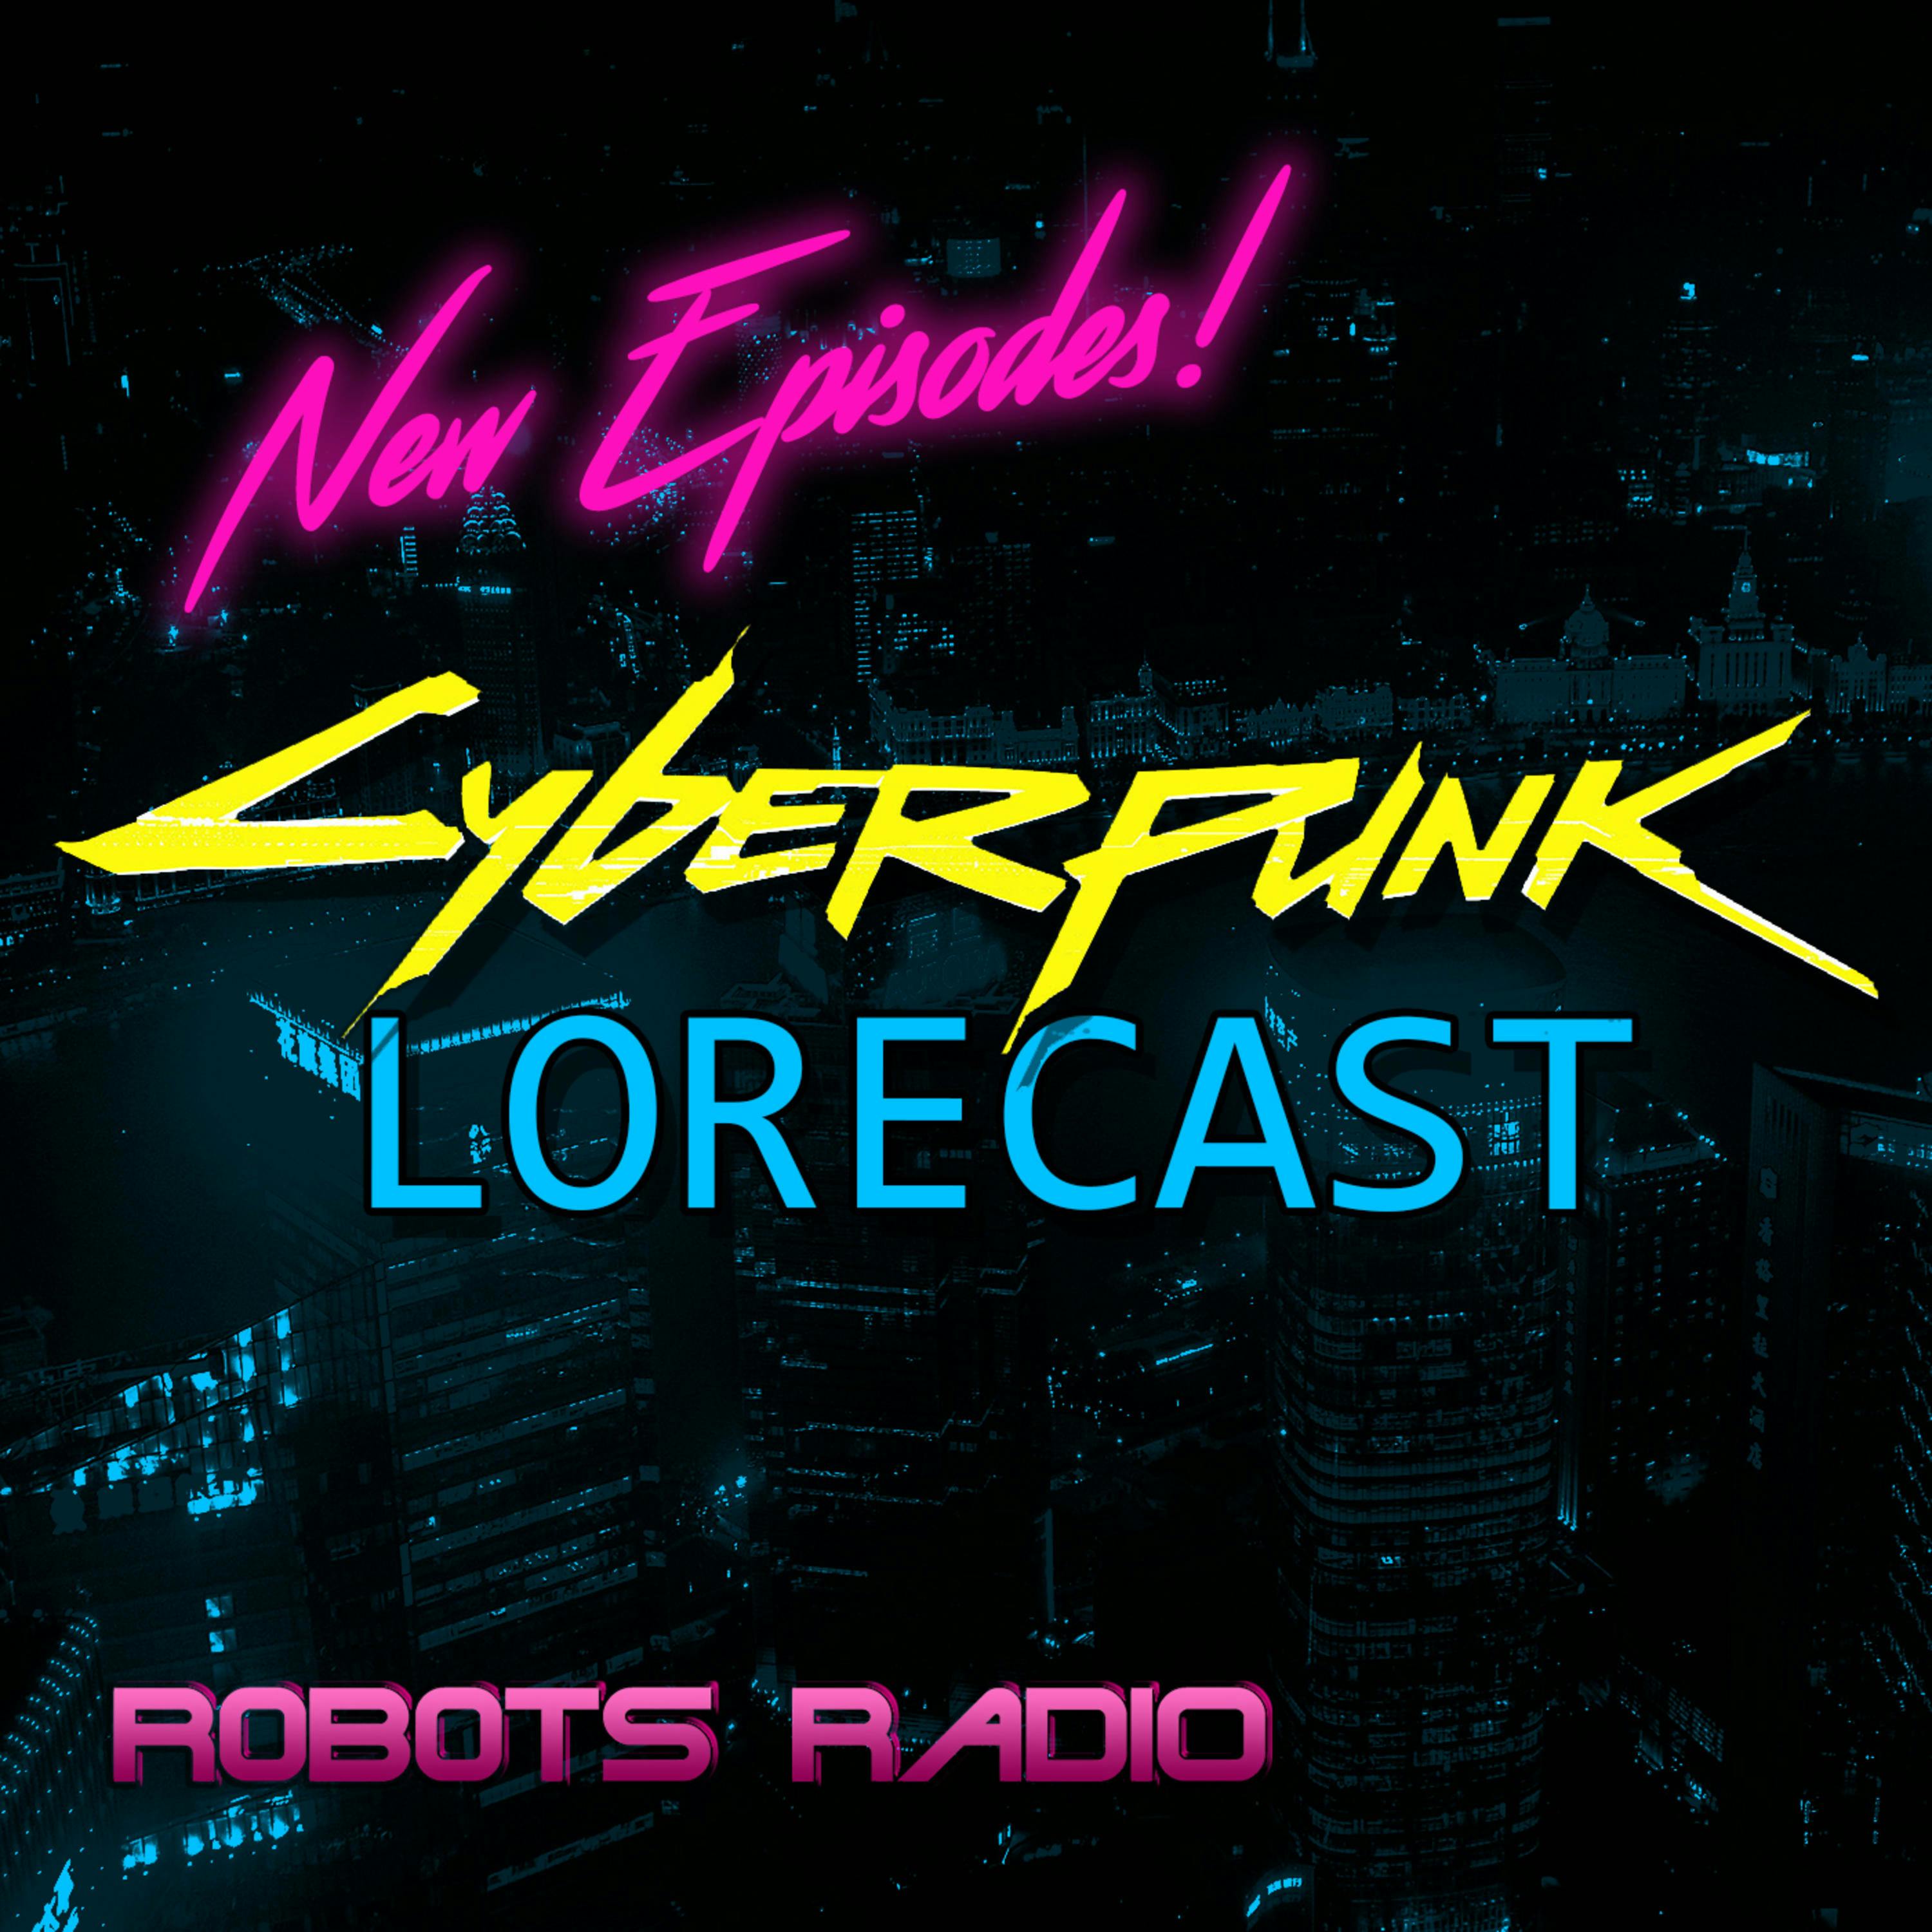 07 :NEWS: Sex with Keanu Reeves? & More Recent News - Cyberpunk Lorecast